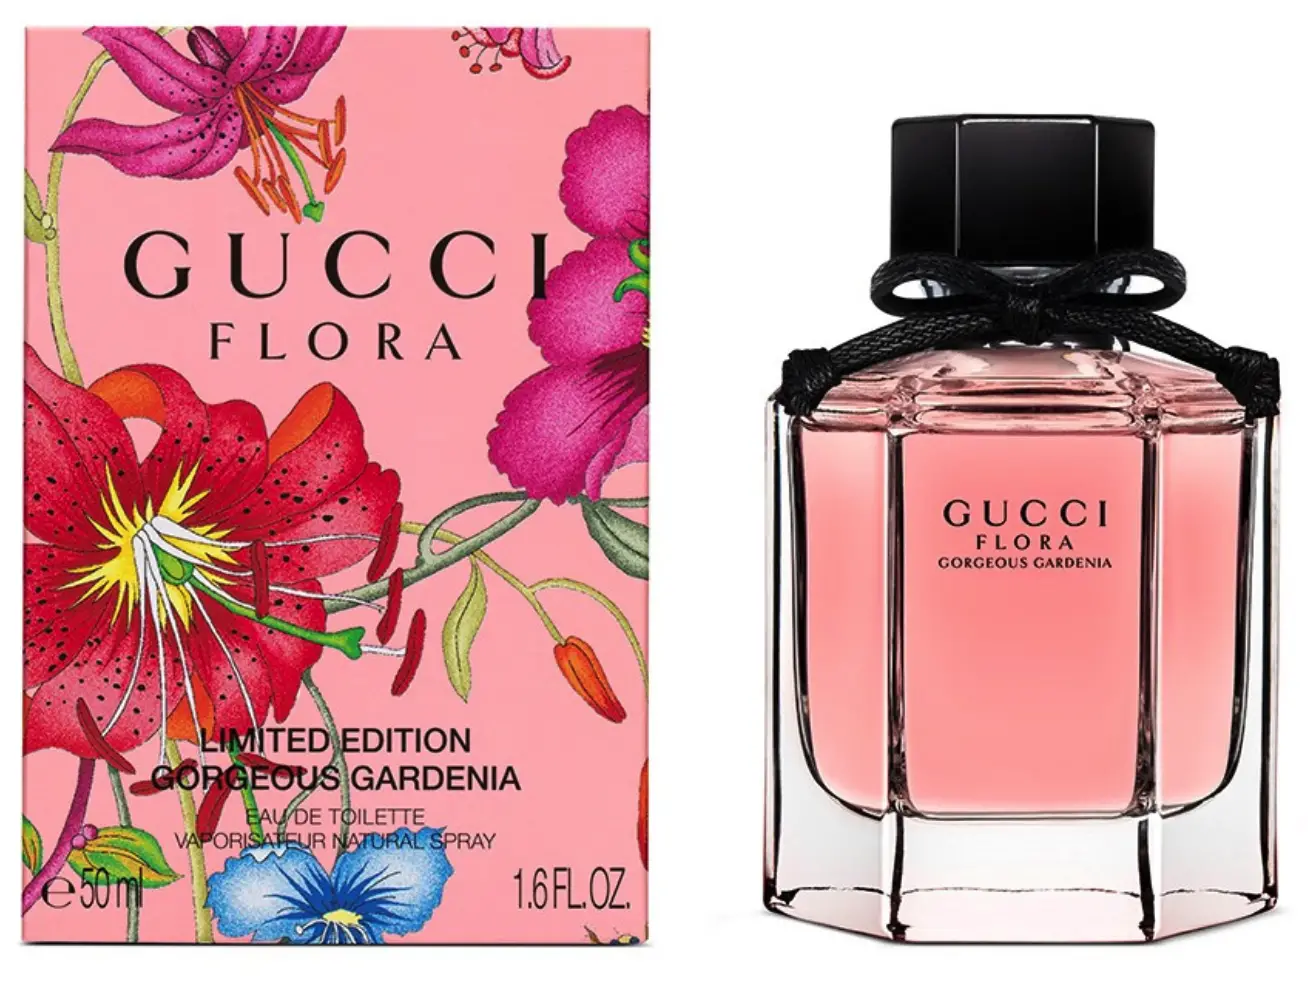 Gucci Perfume Gucci Flora Gorgeous Gardenia 